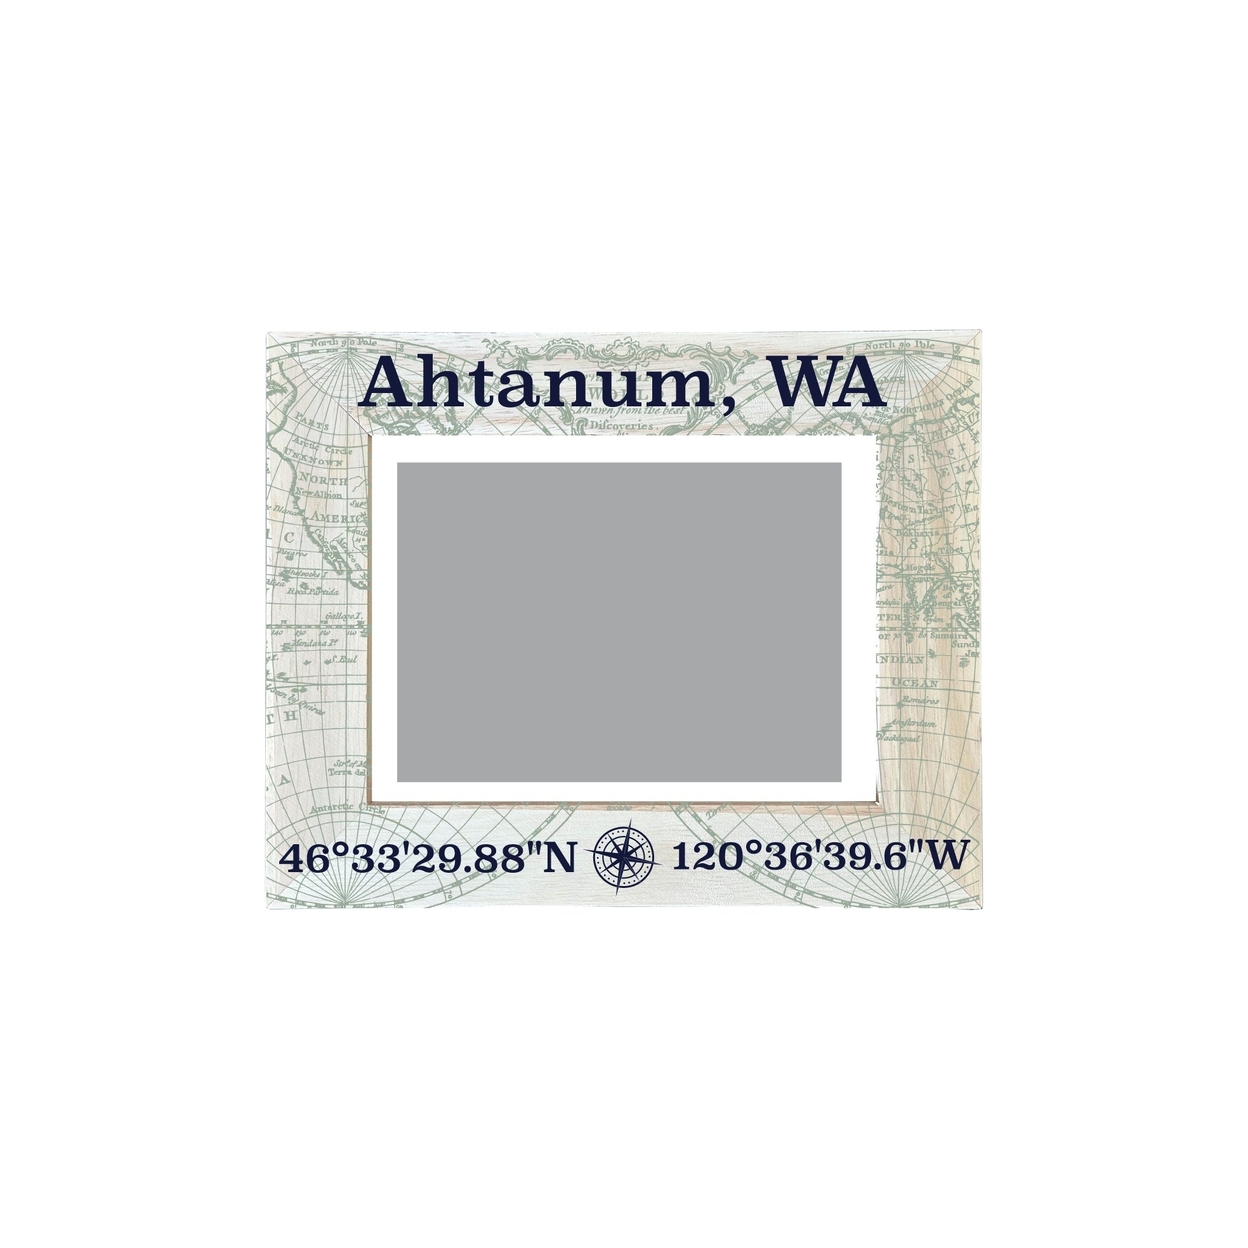 Ahtanum Washington Souvenir Wooden Photo Frame Compass Coordinates Design Matted To 4 X 6